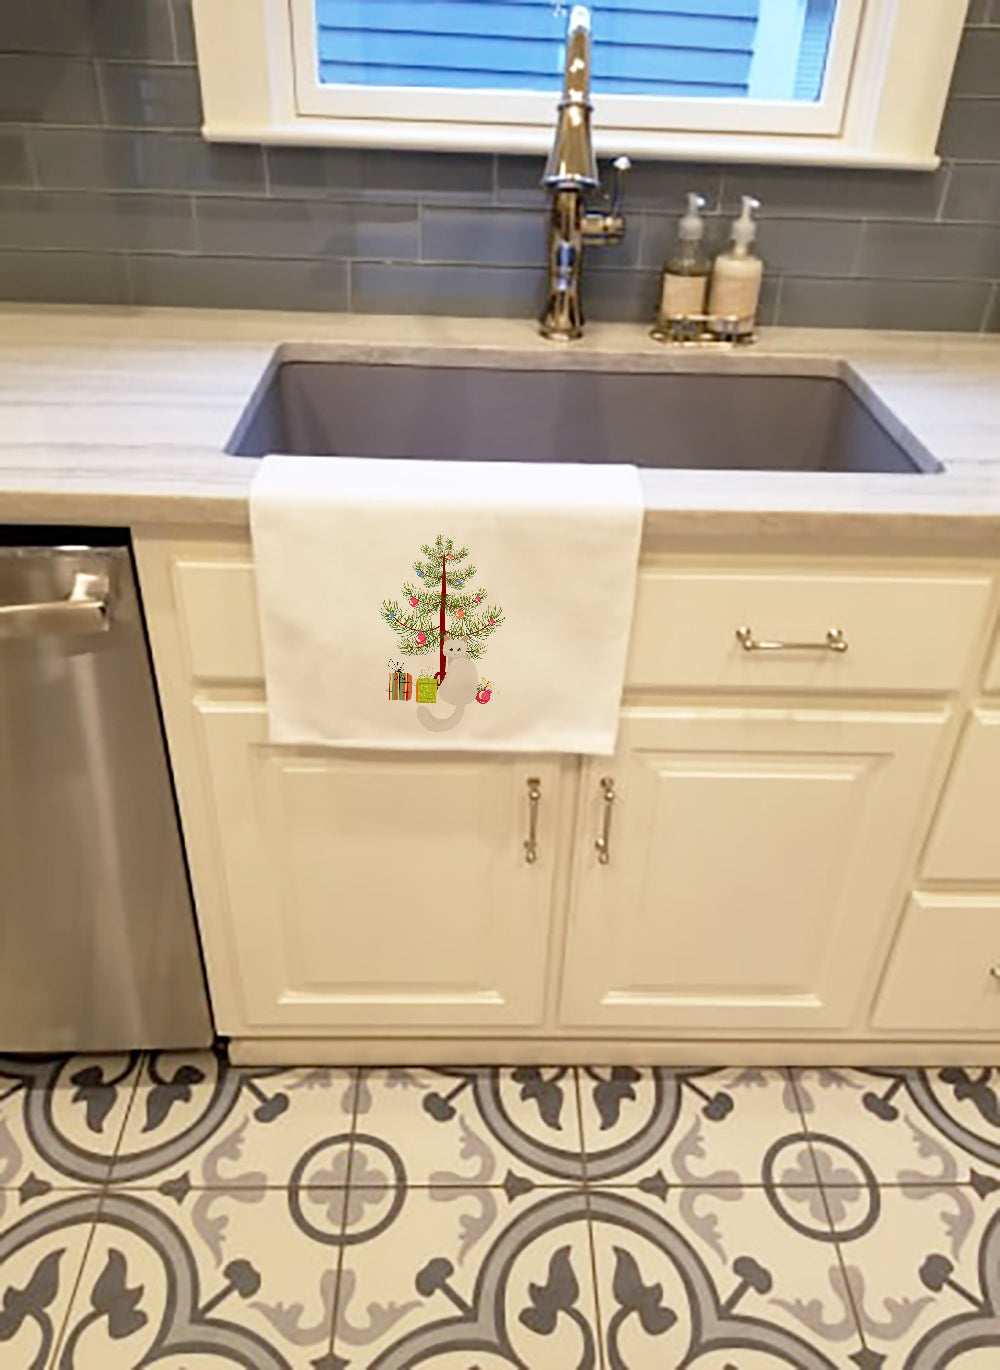 Buy this Turkish Angora Cat Merry Christmas White Kitchen Towel Set of 2